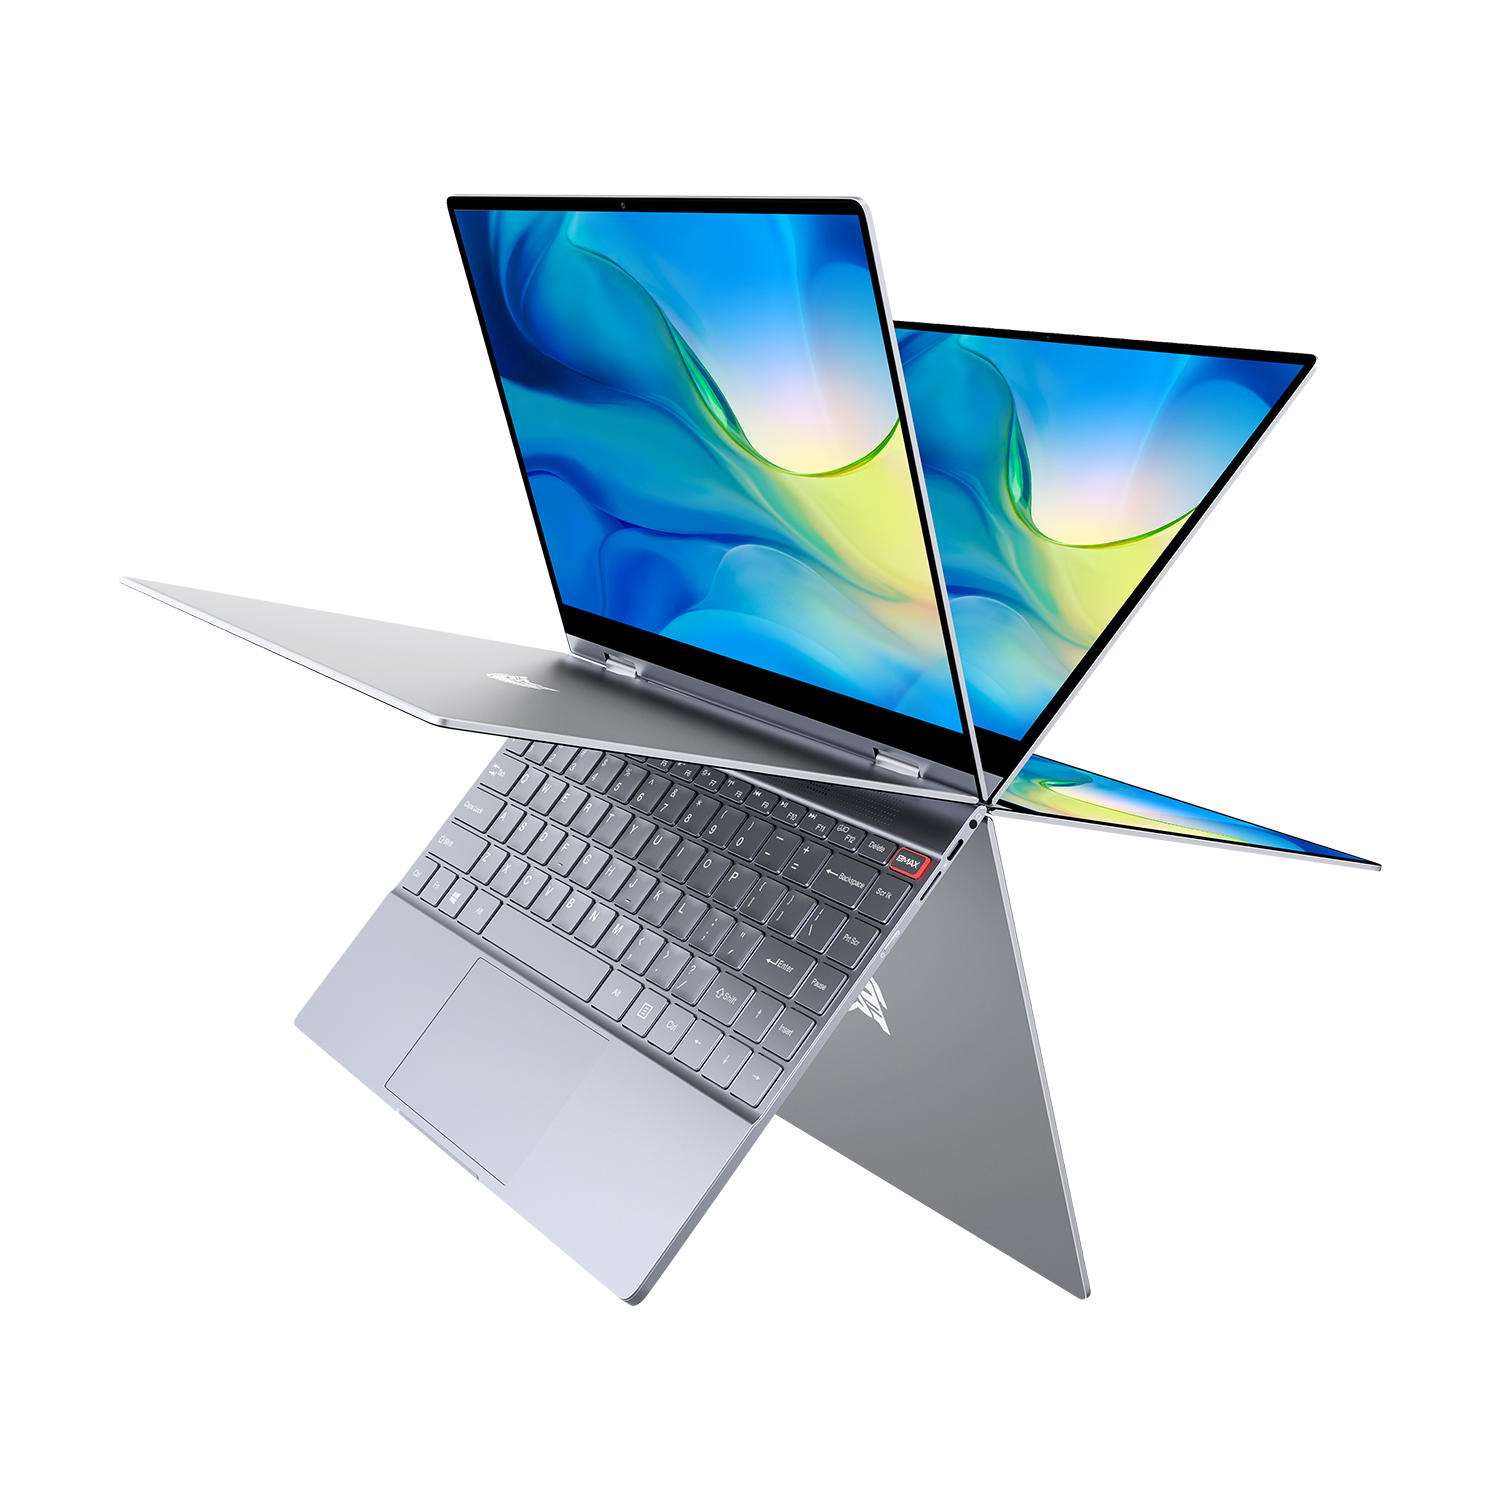 BMAX Y13 Laptop 360-degree 13.3 inch Intel Gemini Lake N4100 Intel UHD Graphics 600 8GB LPDDR4 RAM 256GB SSD Notebook 